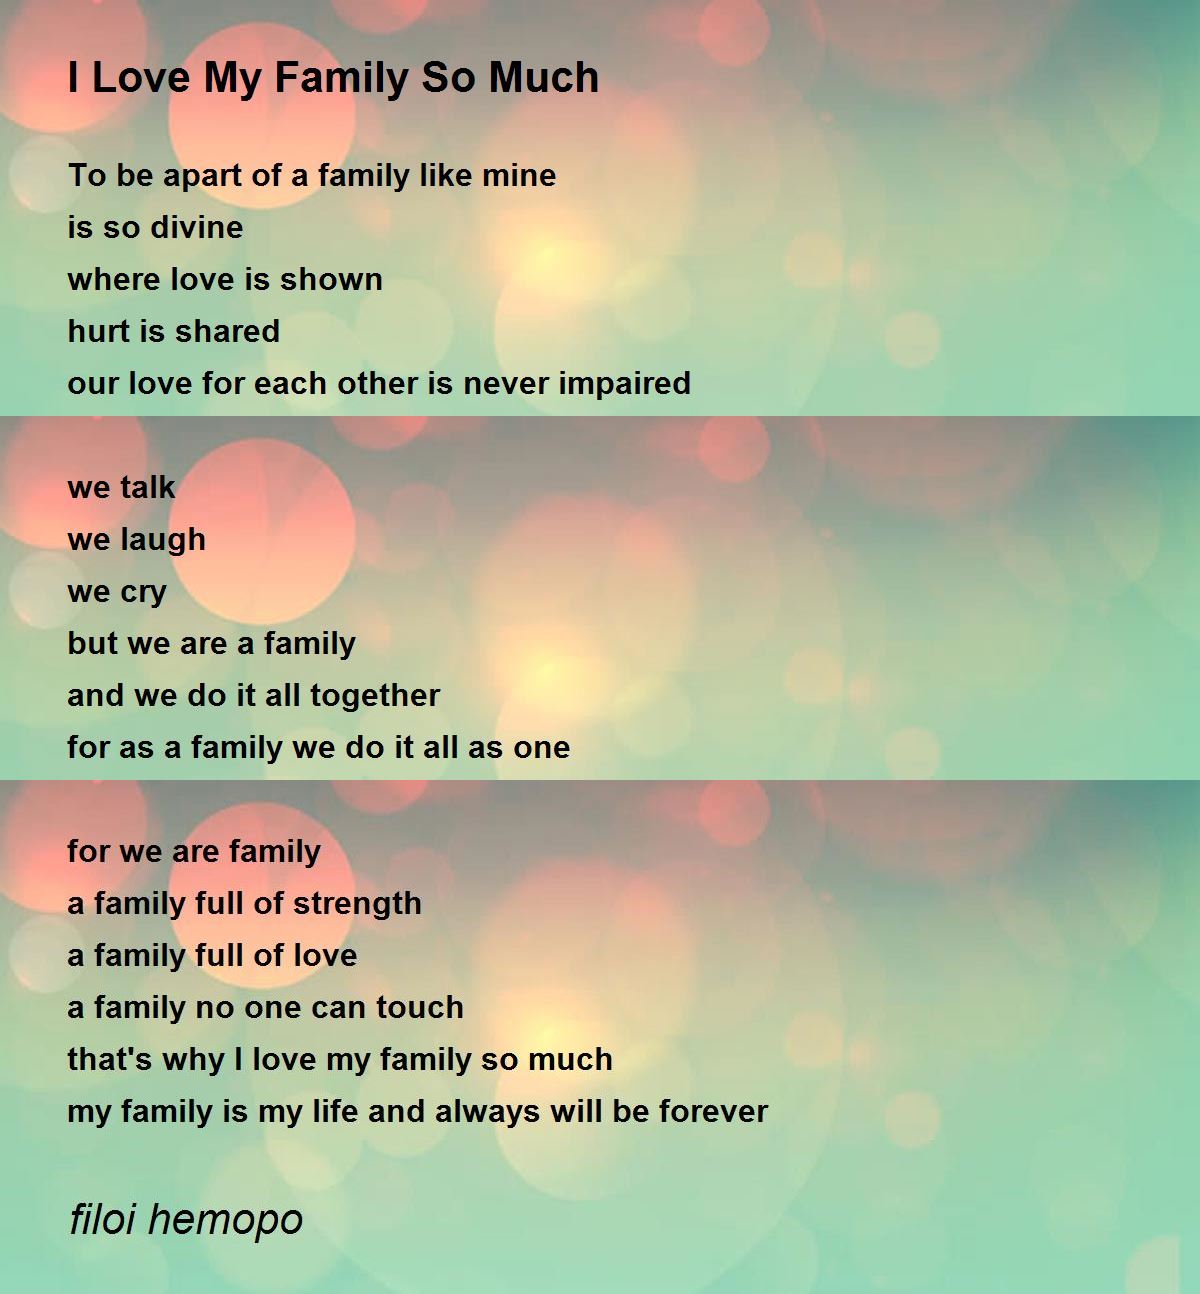 I Love My Family So Much Poem by filoi hemopo - Poem Hunter